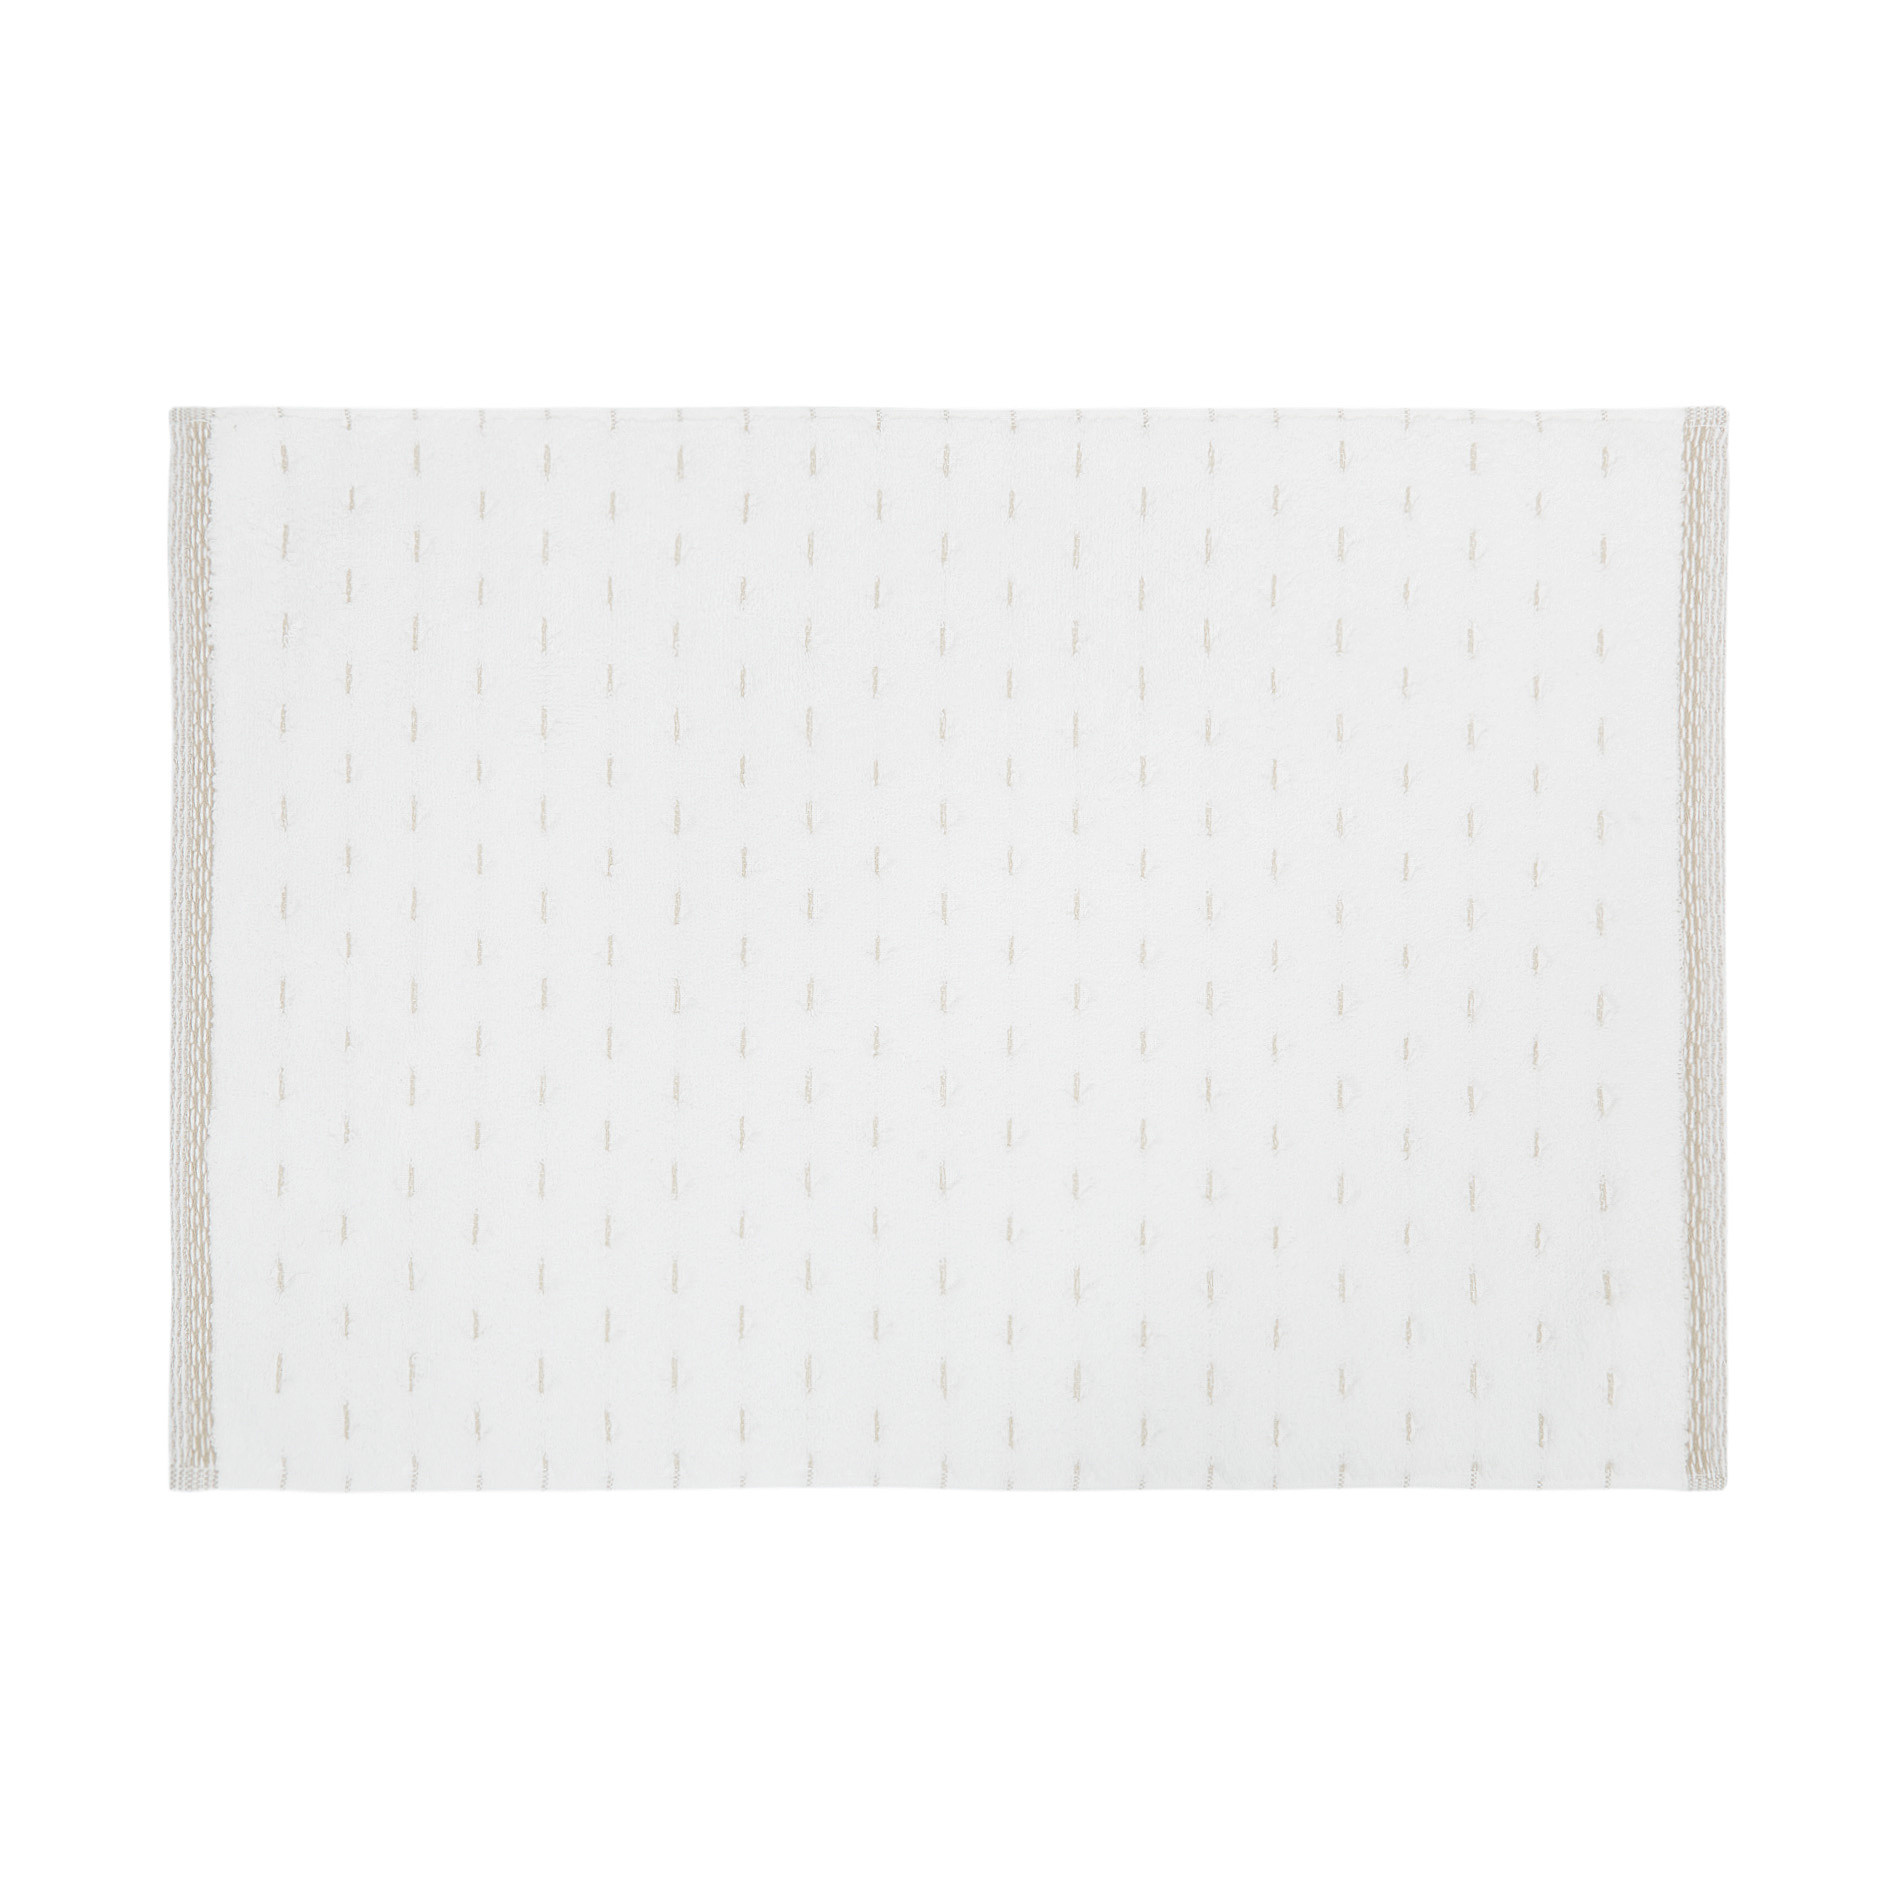 Asciugamano spugna di cotone motivo trattini Portofino, Bianco, large image number 1